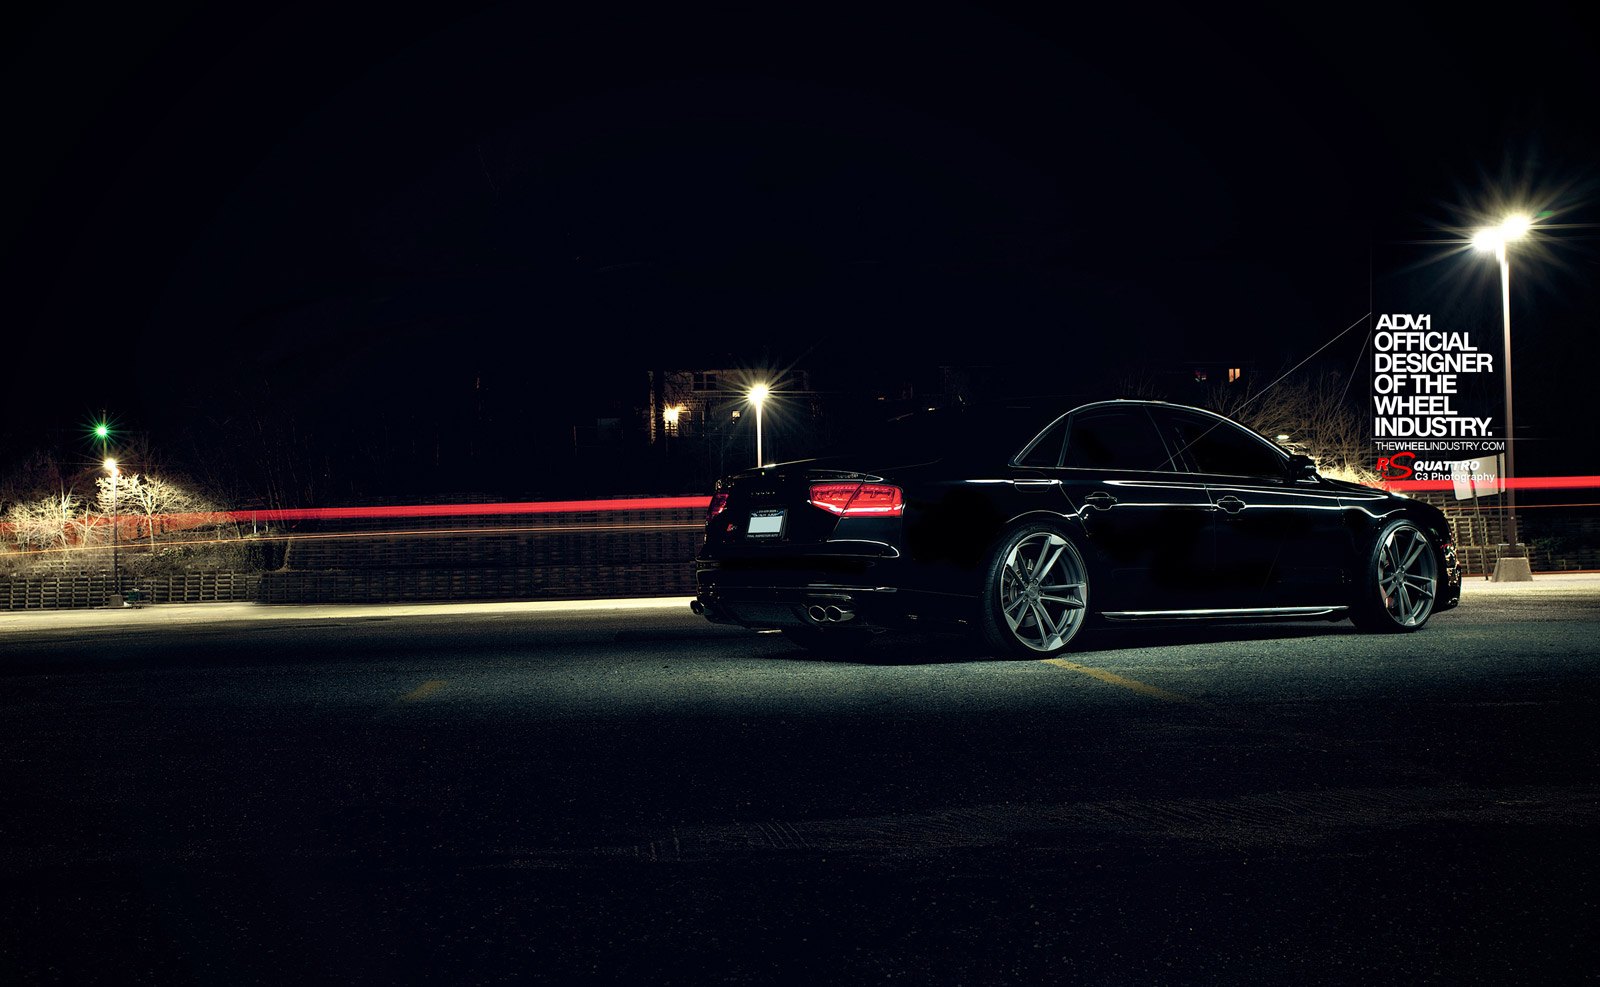 Custom Rear Diffuser on Black Audi A8 - Photo by ADV.1